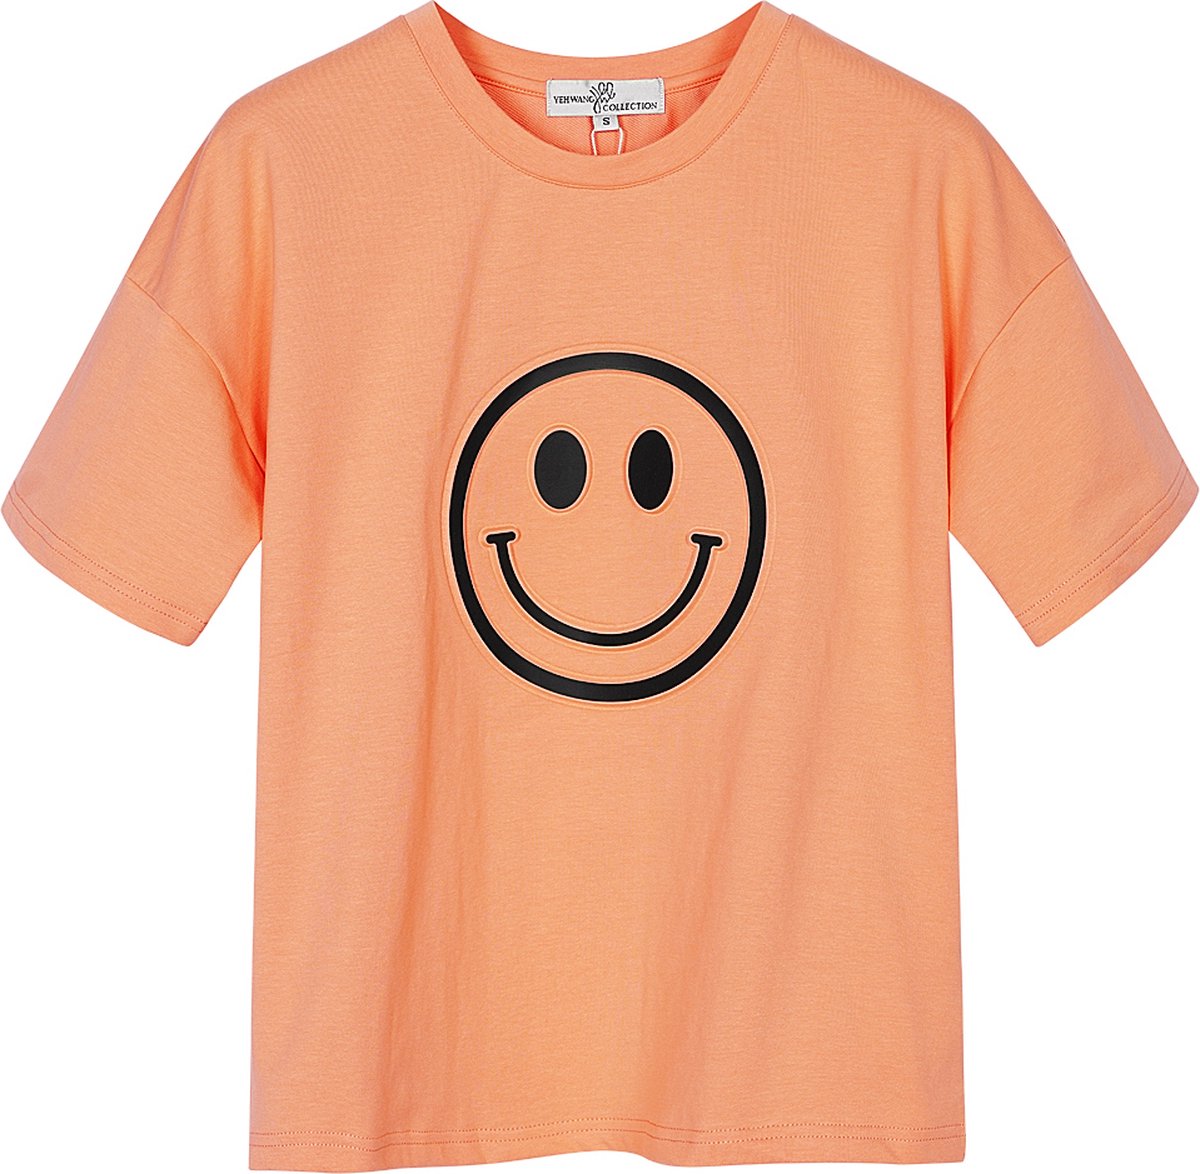 Yehwang - T-shirt met smiley - Oranje - Maat S